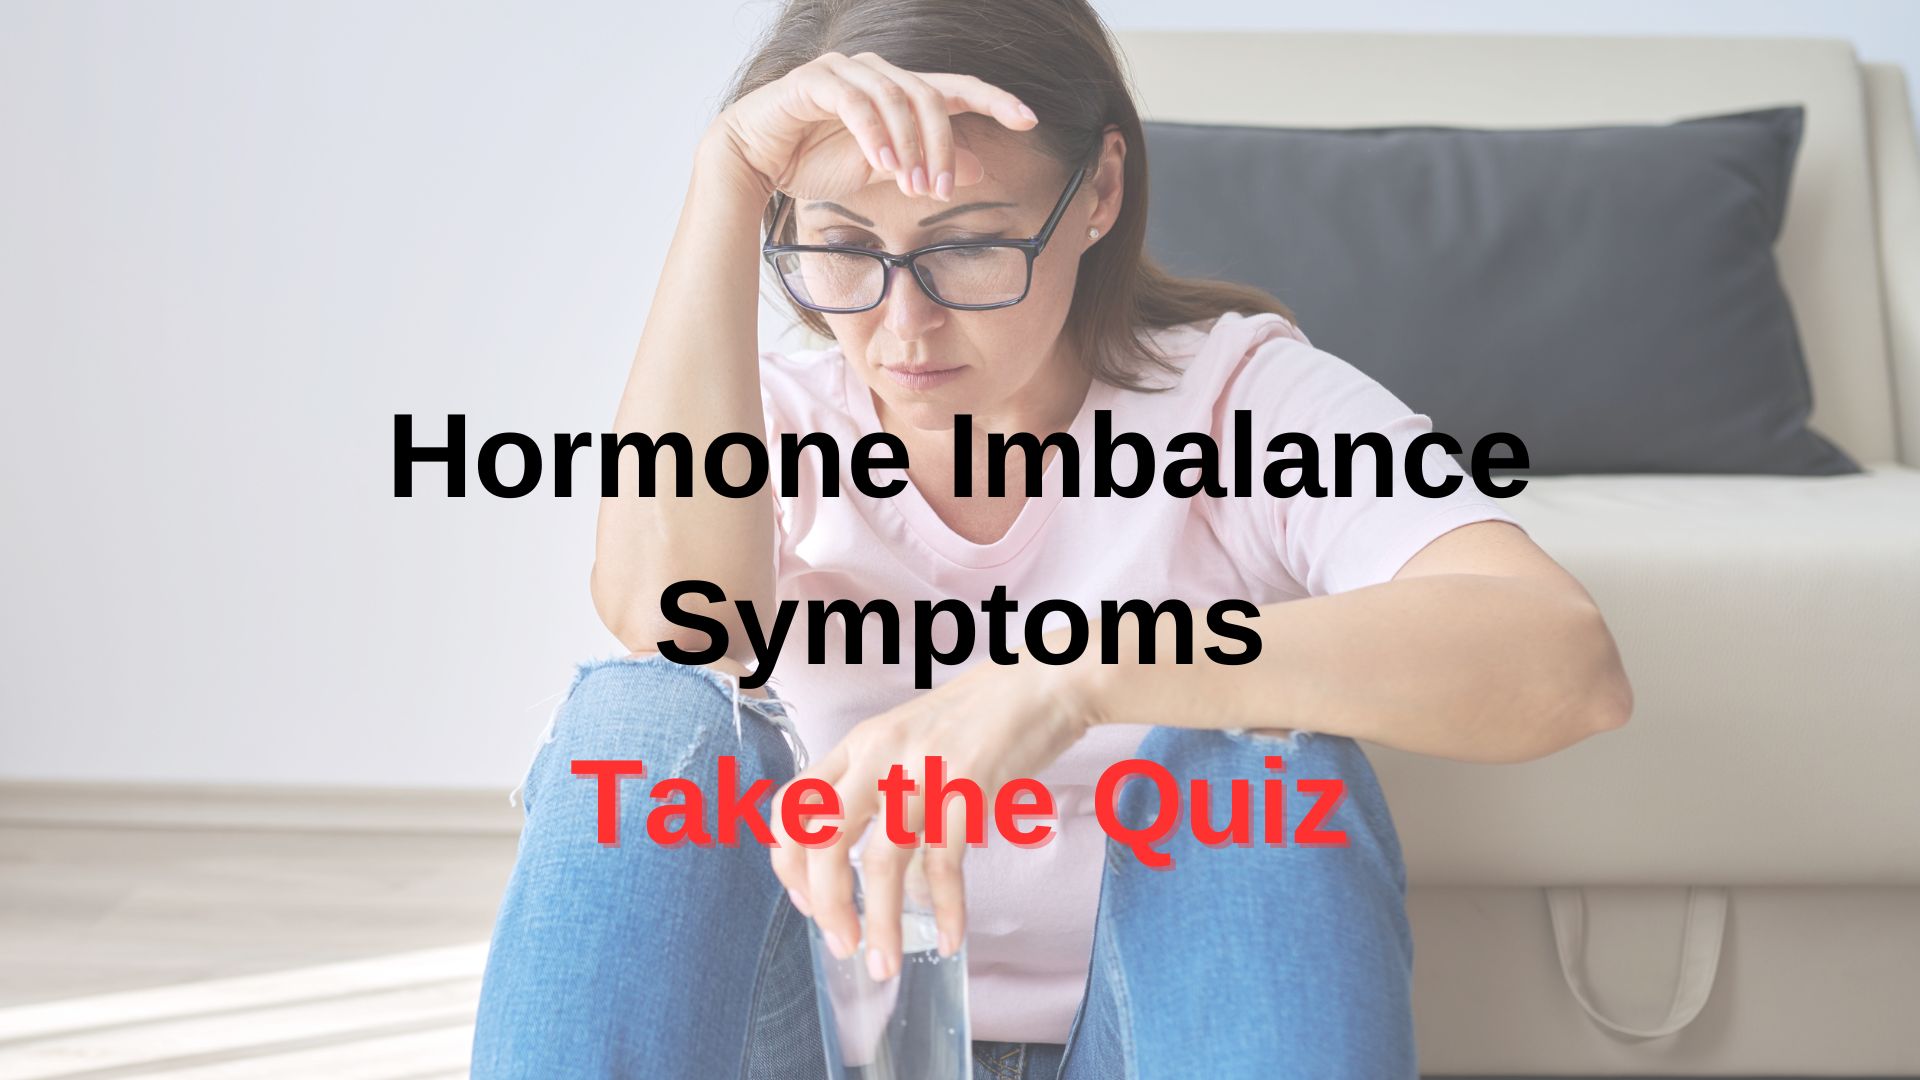 Hormone Imbalance in Women Symptoms